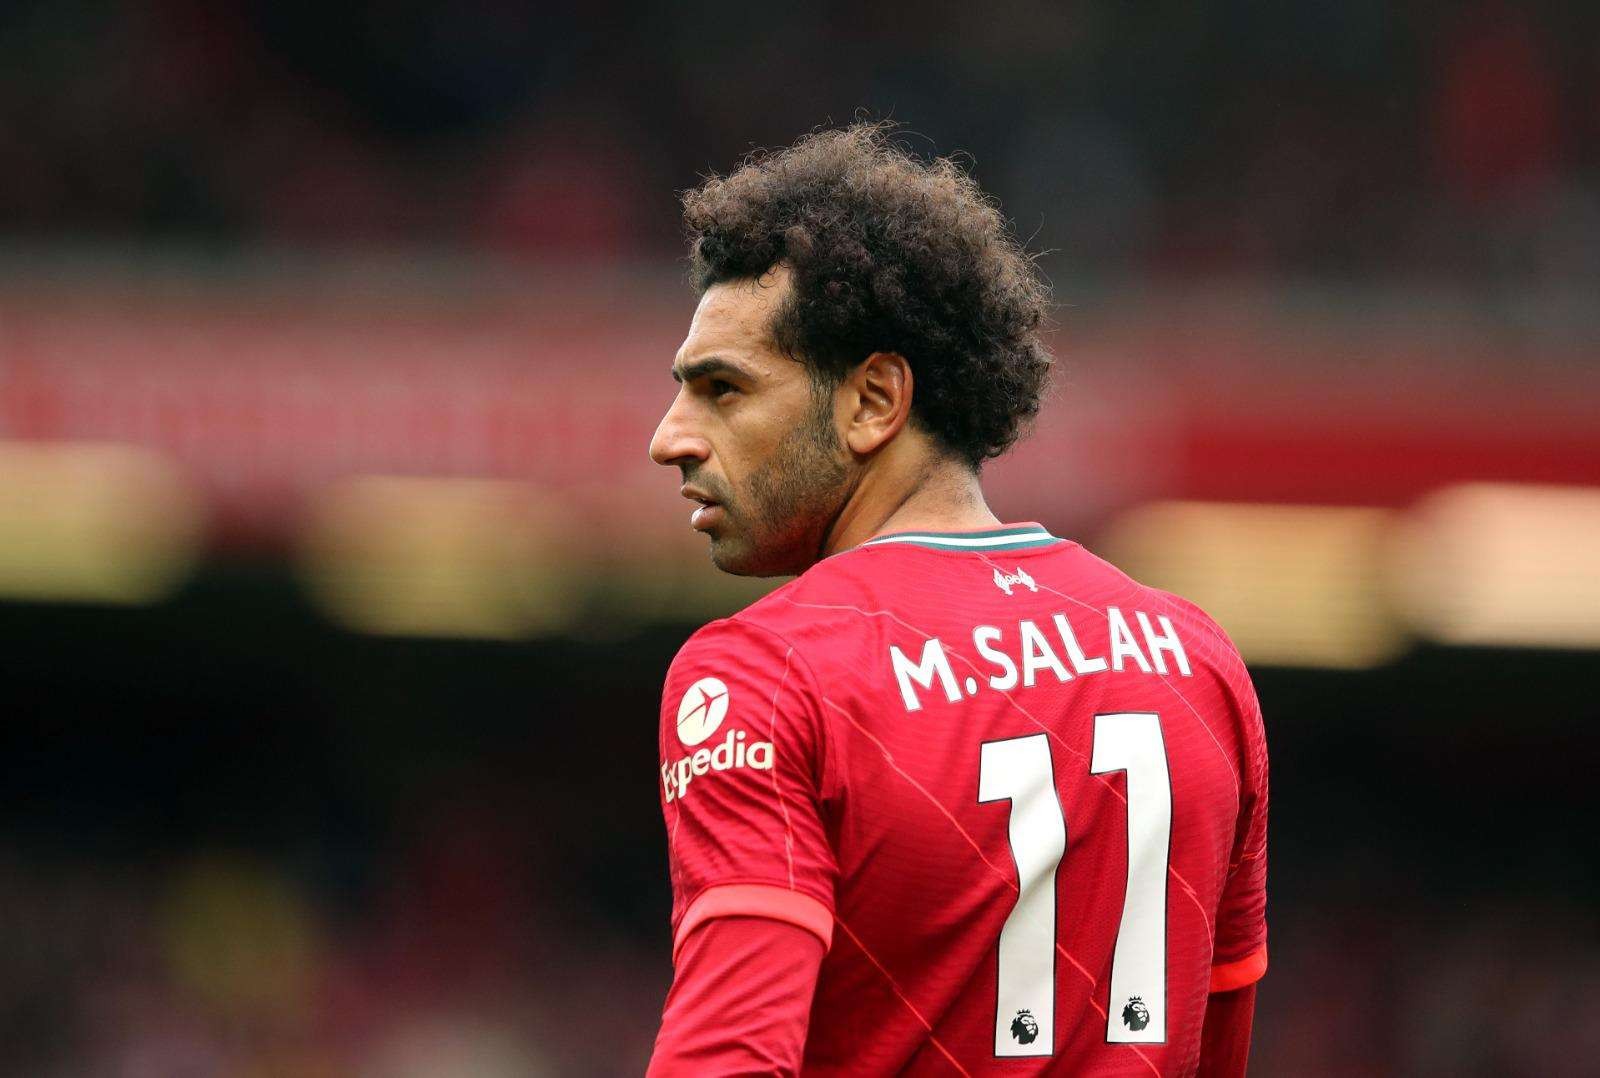 Mohamed Salah akan membela Timnas Mesir saat Piala Afrika nanti diputar. (Foto: Twitter/@MoSalah)